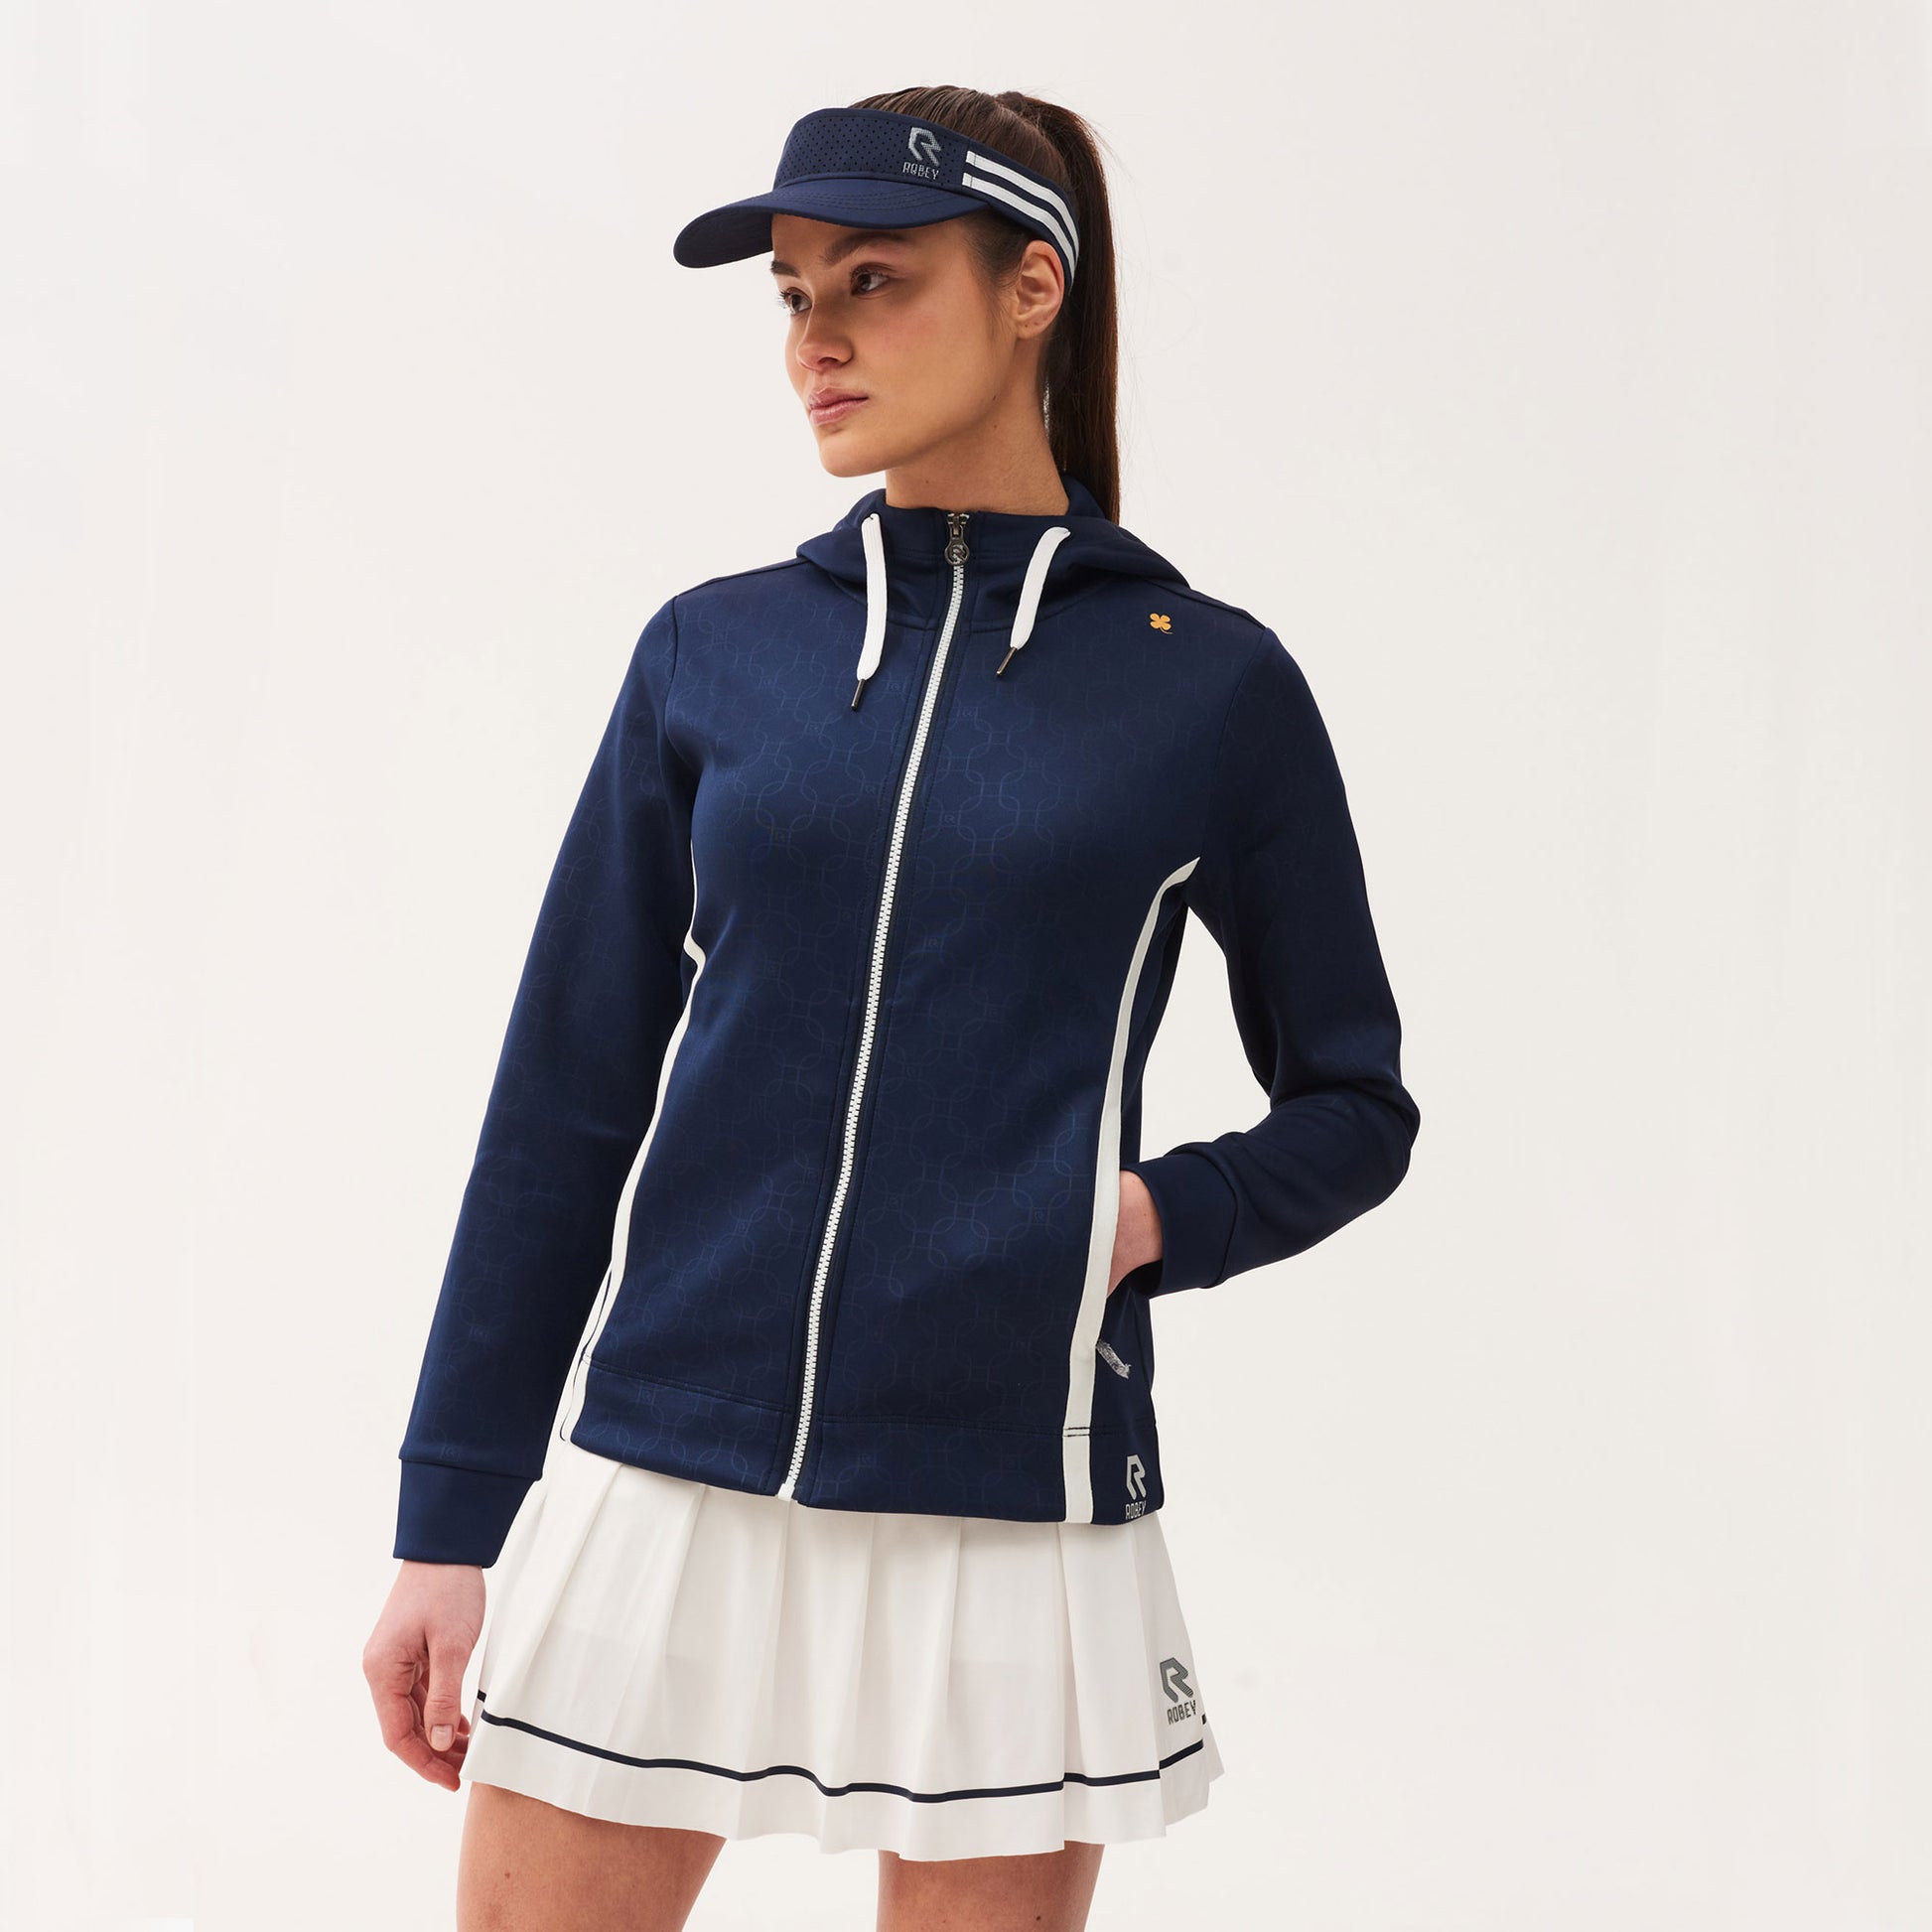 Robey Forehand Women's Full-Zip Tennis Jacket Dark Blue (1)